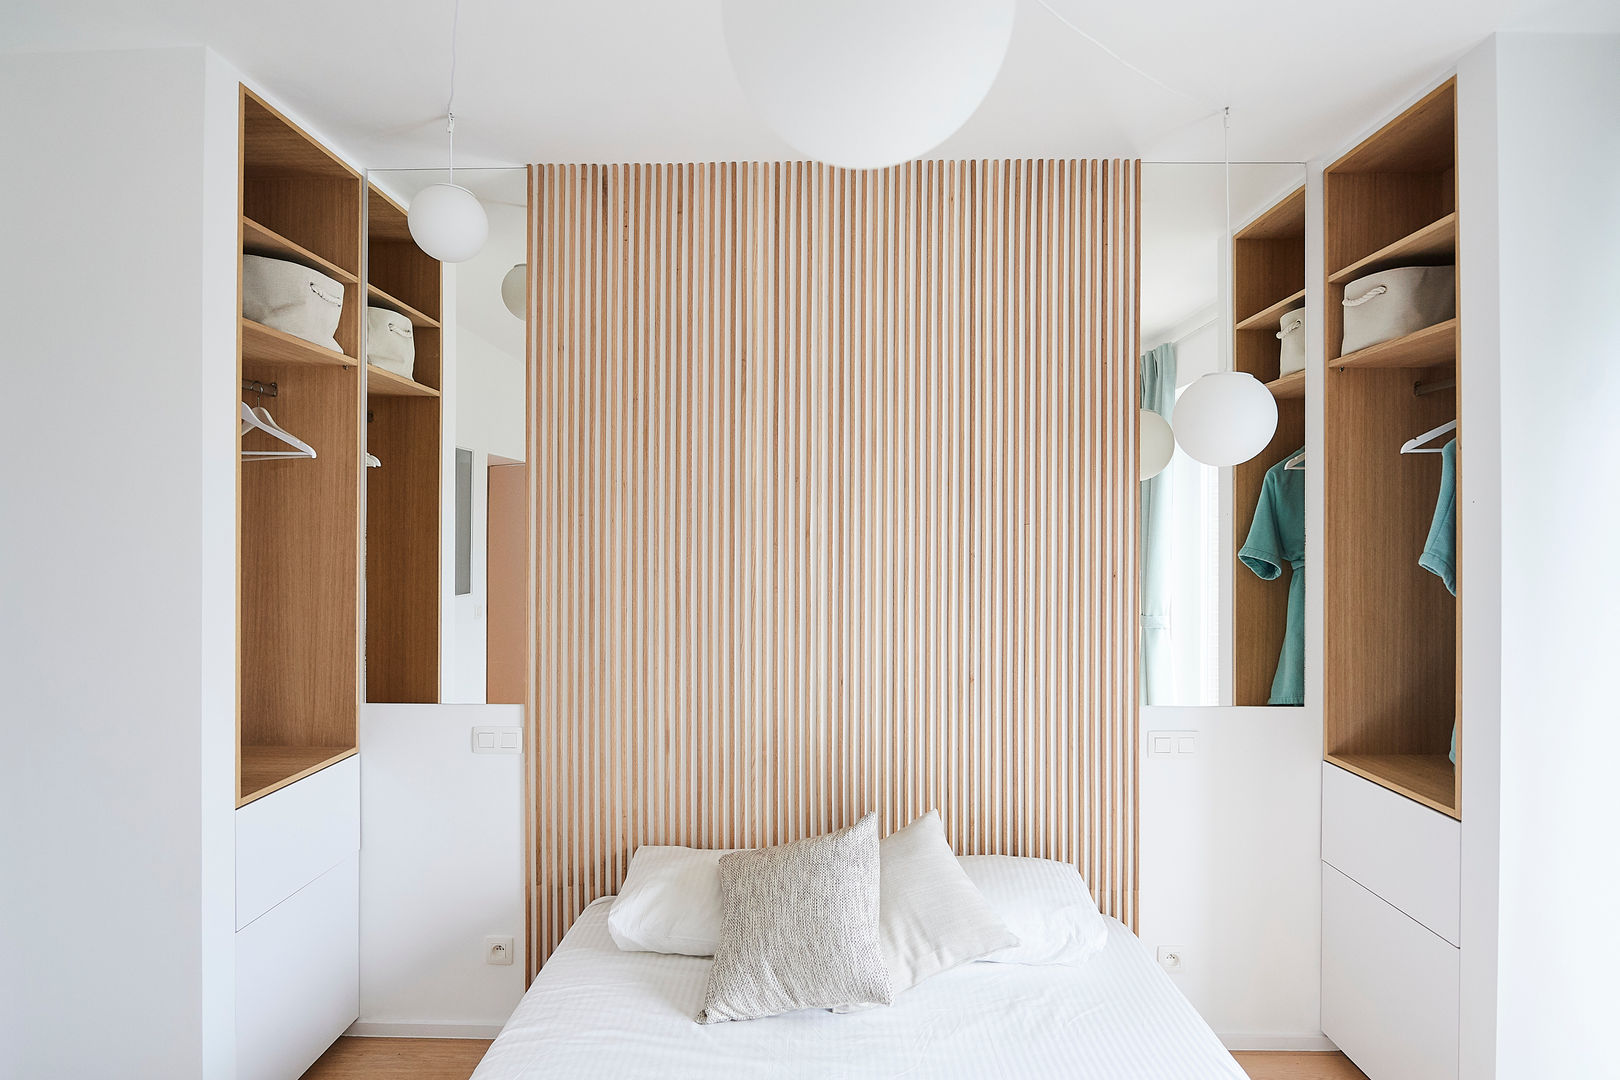 Penthouse en ville, justinside justinside Phòng ngủ phong cách tối giản Than củi Multicolored